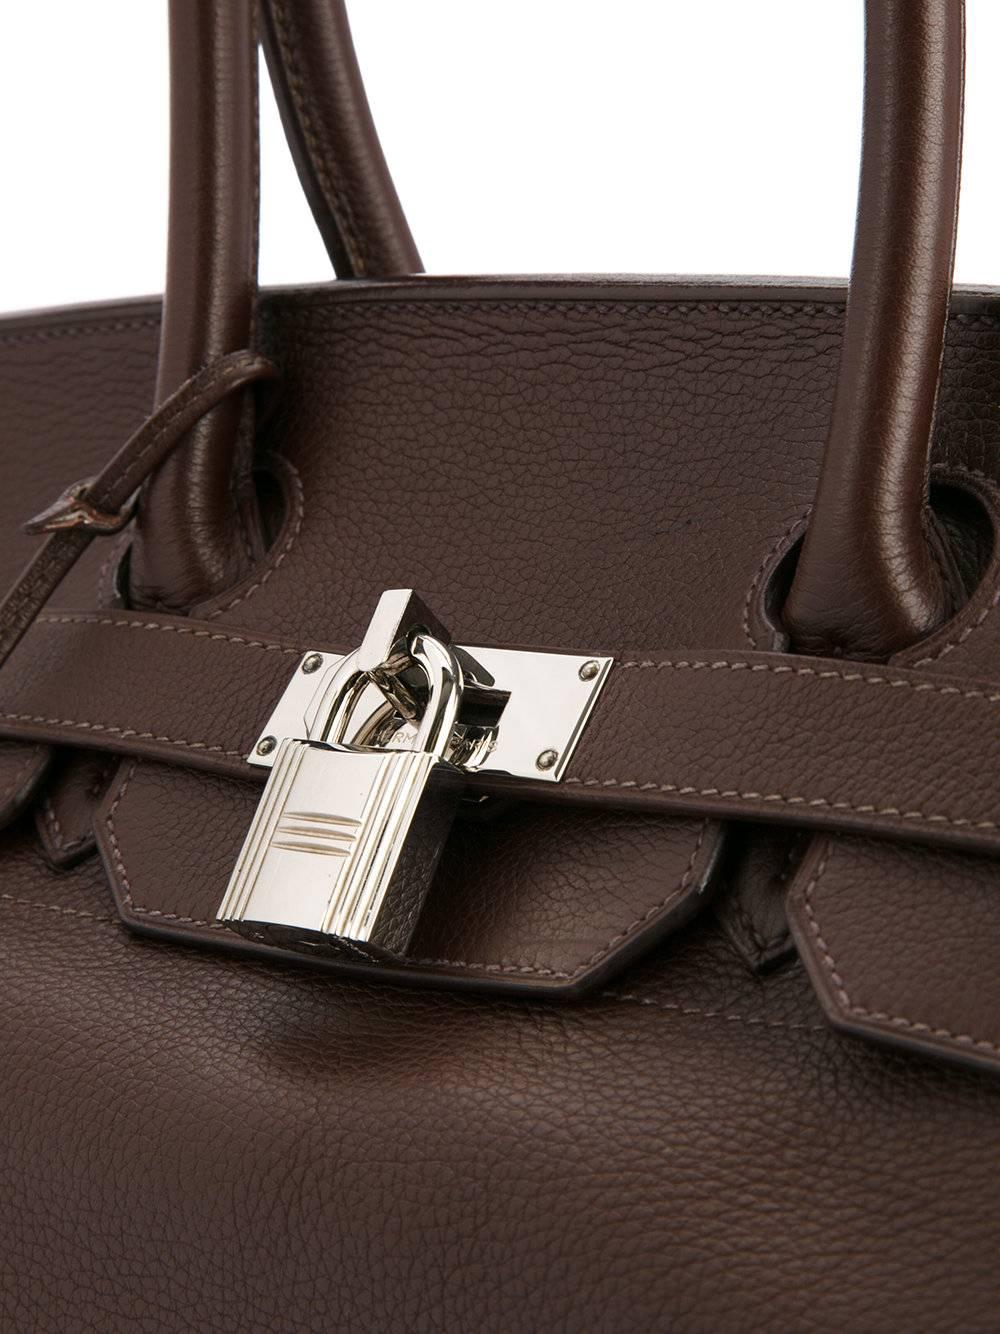 Black Hermes Birkin Chocolate Brown Leather Palladium Top Handle Satchel Flap Bag